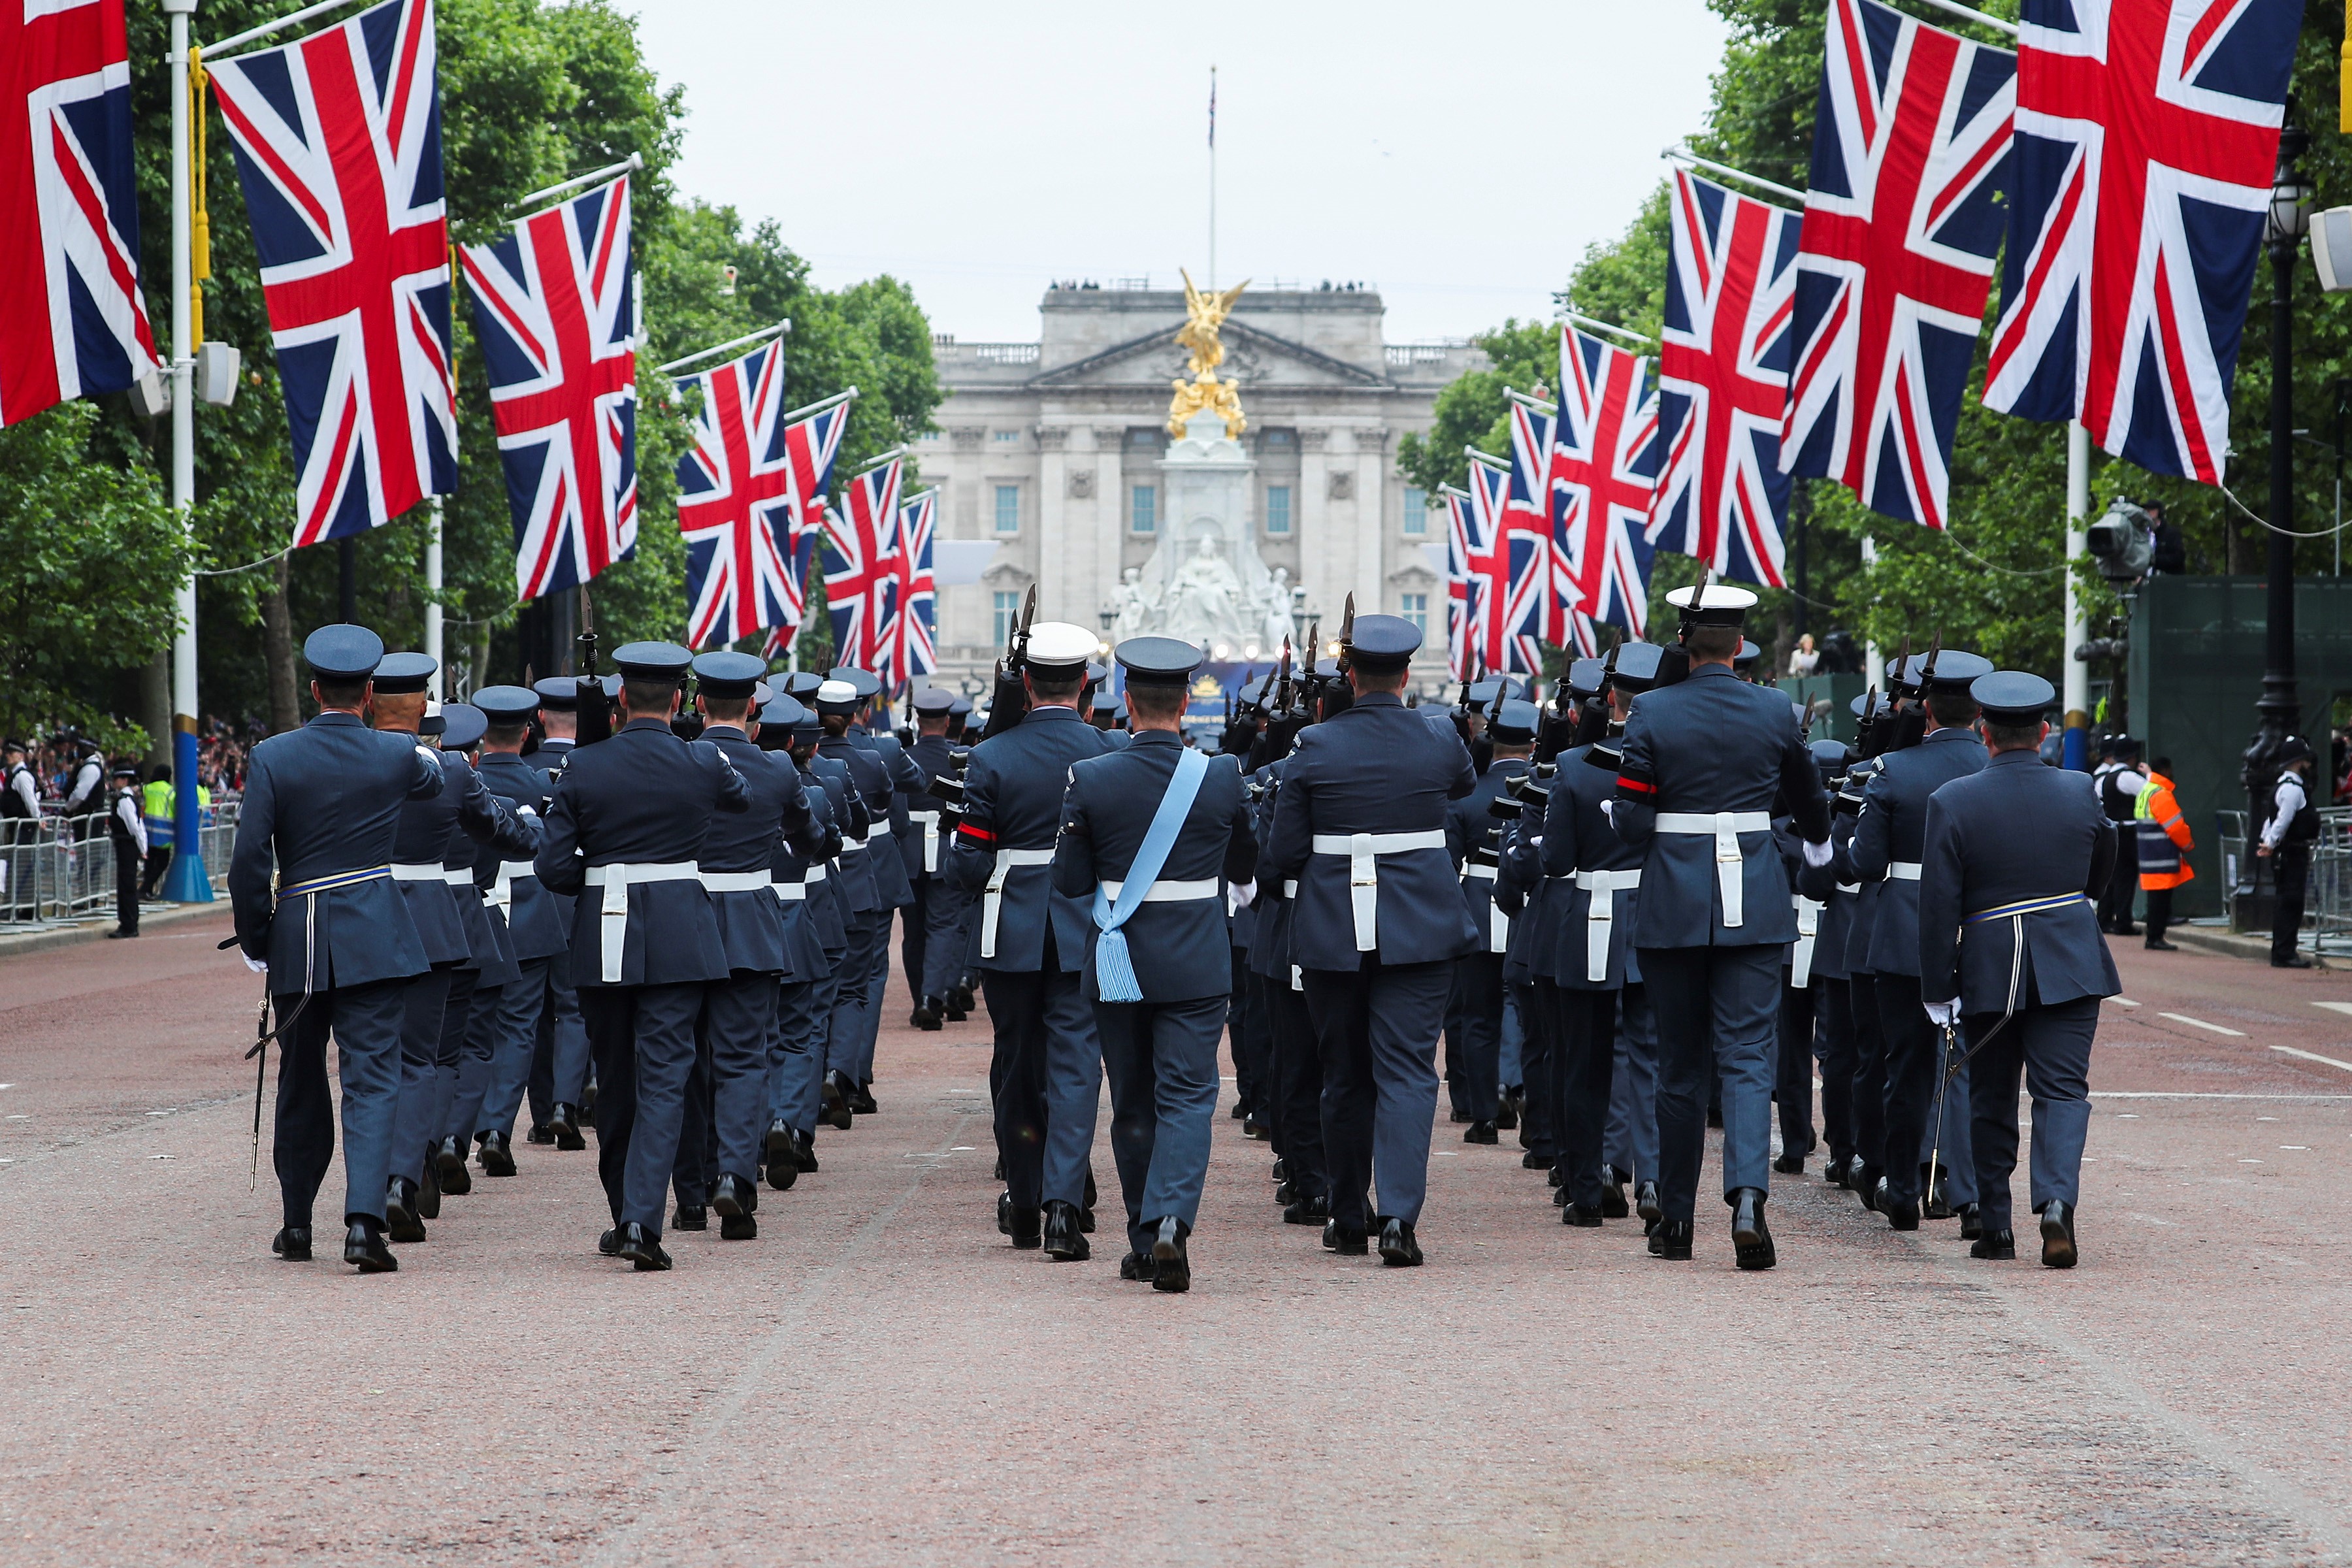 RAF aviators parade The Mall, with Union Jacks. 